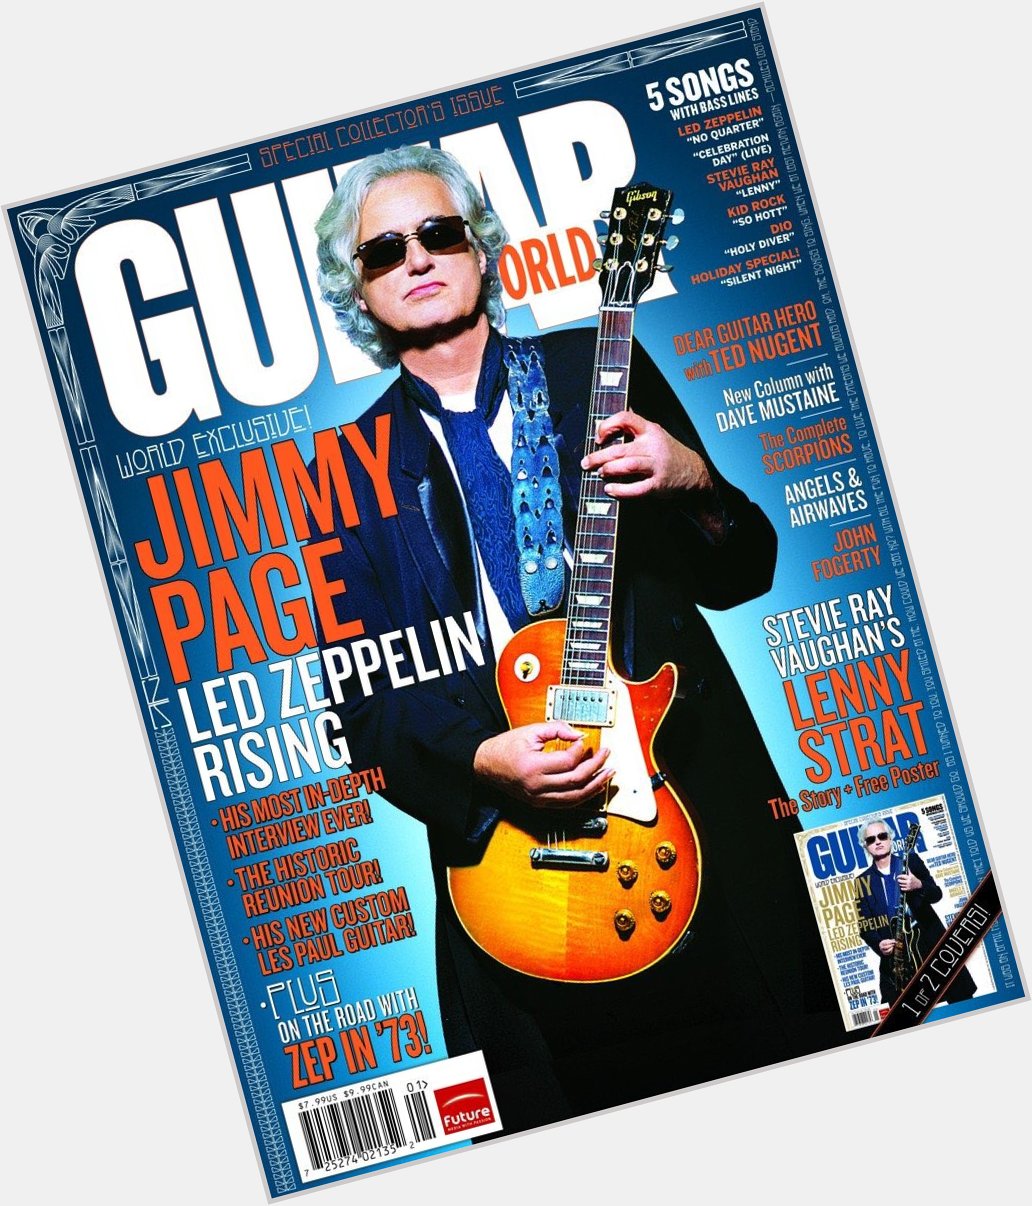 Happy Birthday, Jimmy Page!  